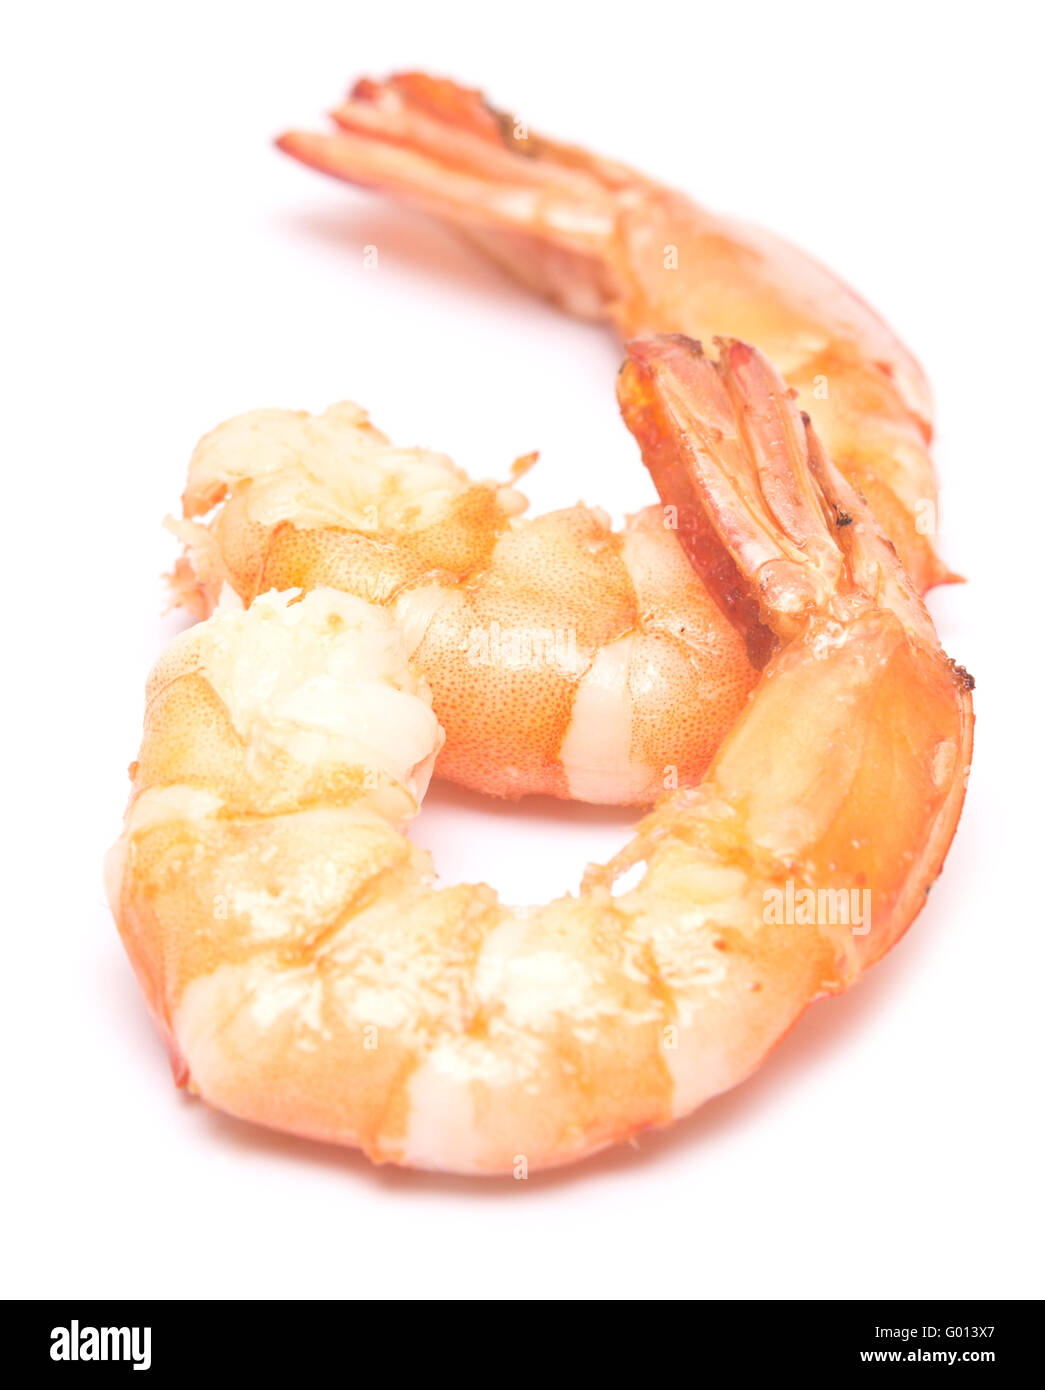 grilled shrimps on white Stock Photo